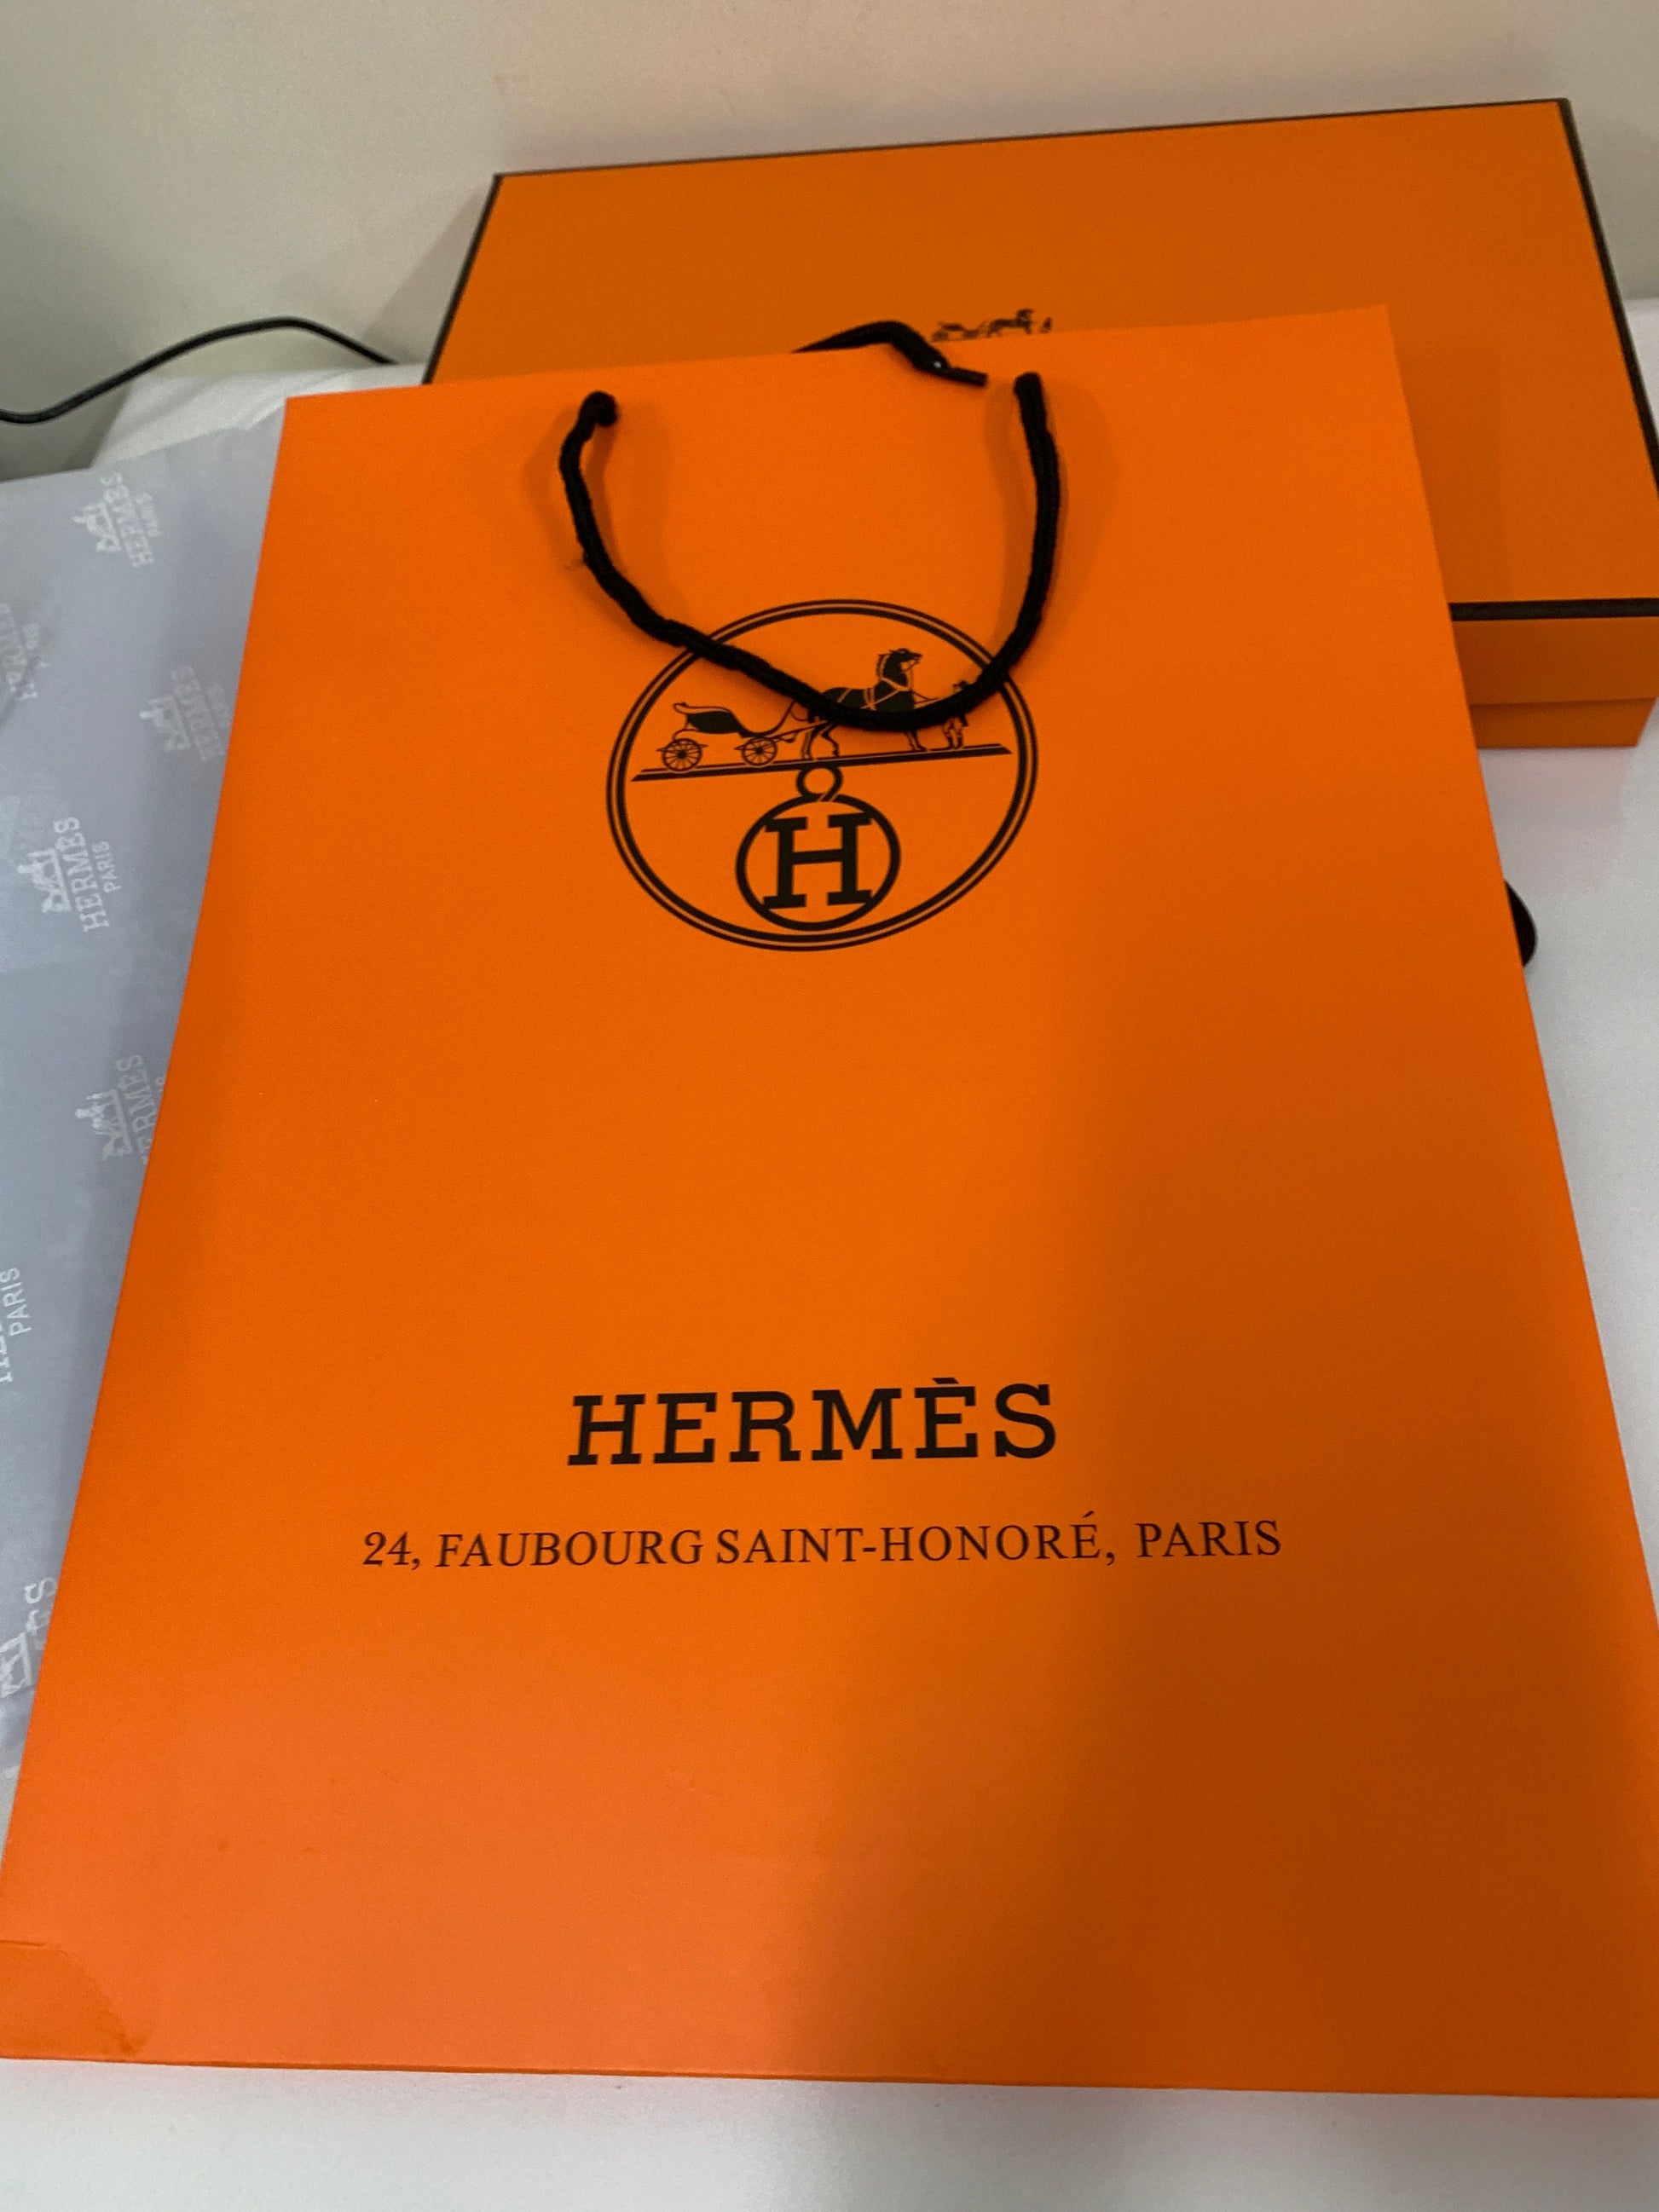 Hermes shopping bag and gift box